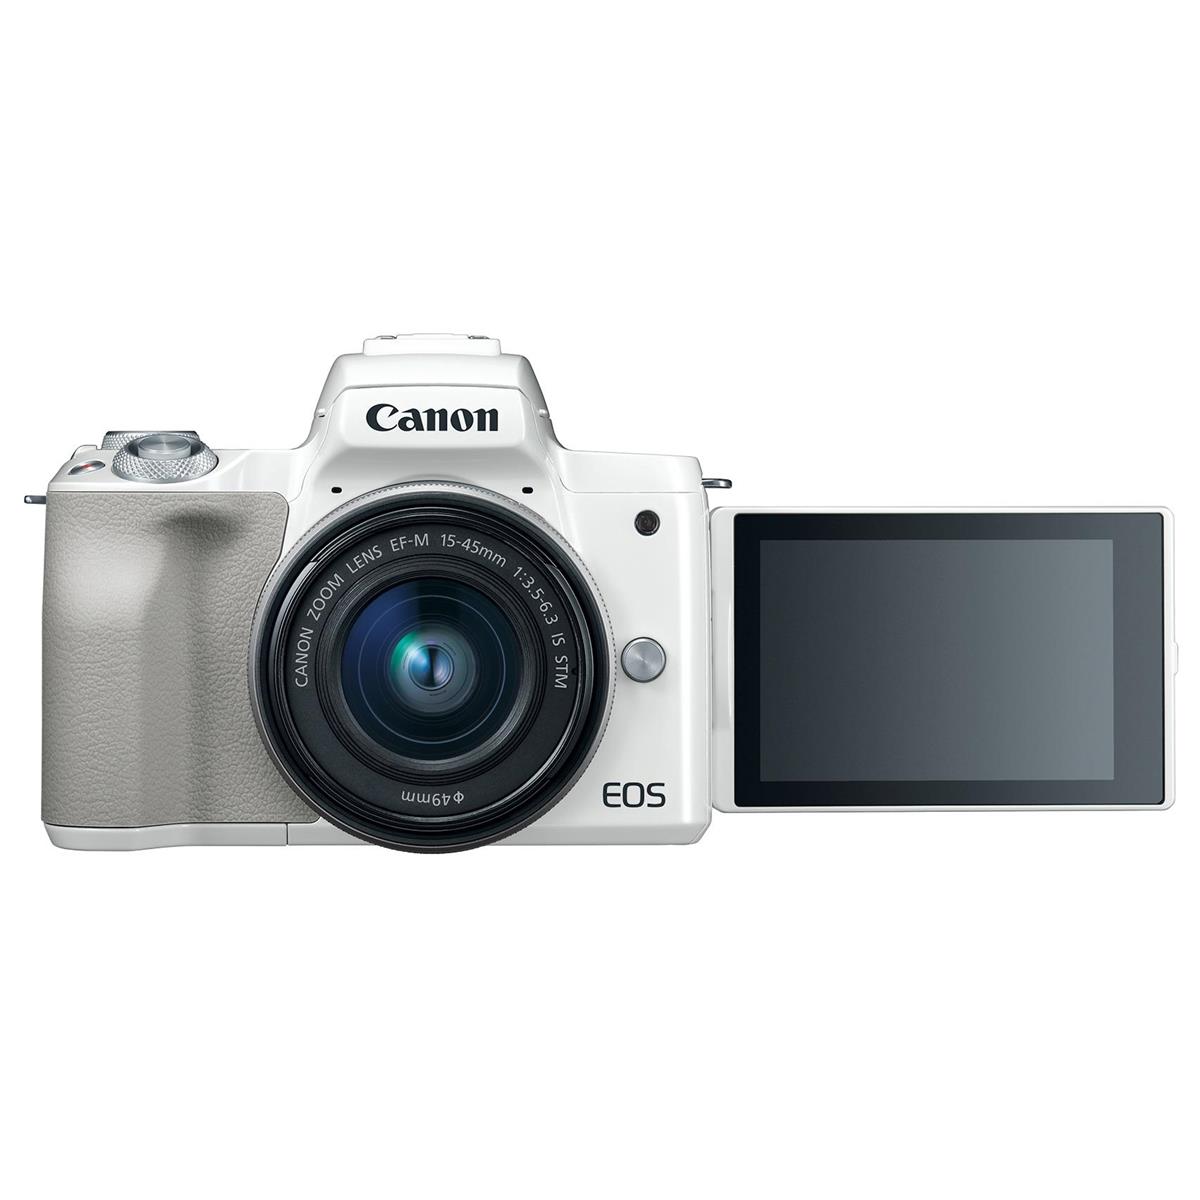 Just Announced – Canon EOS M50 Mirrorless Camera